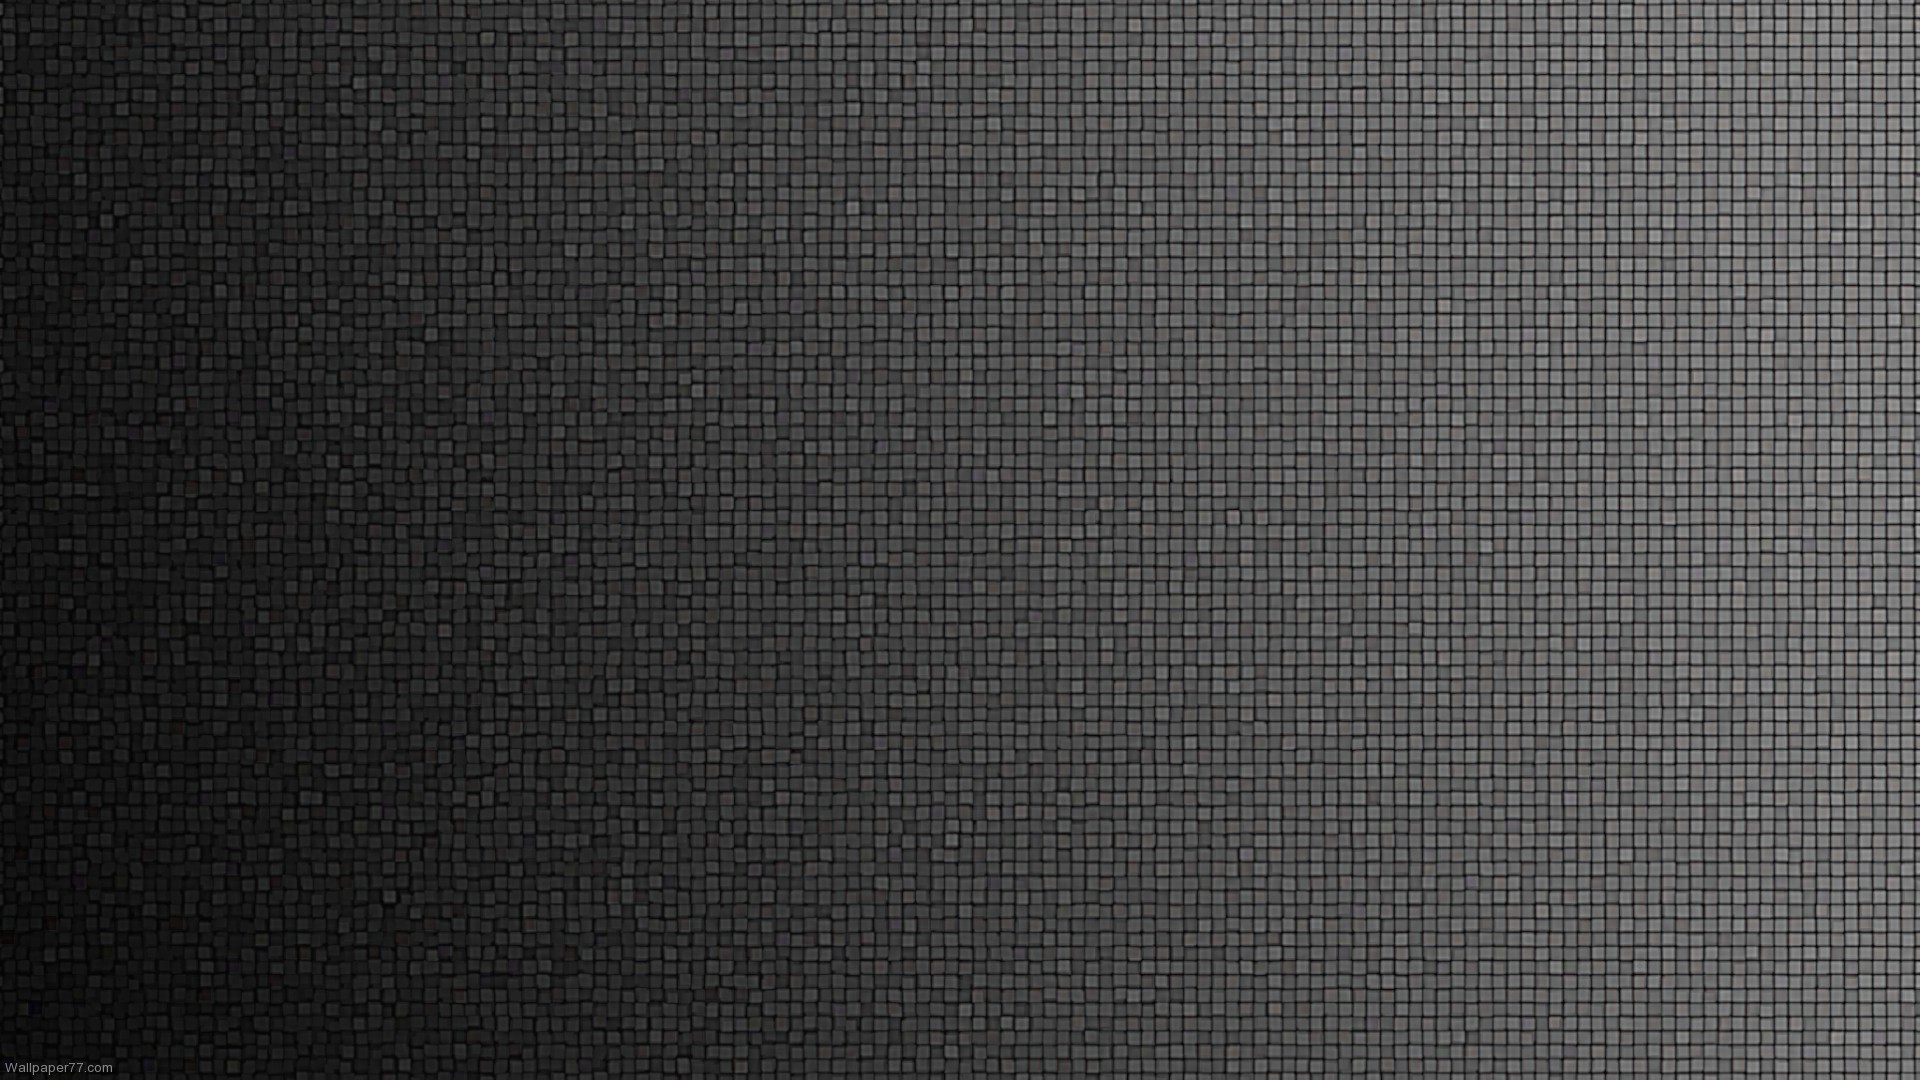 ipad 3 wallpaper ipad wallpaper retina display wallpaper the new 1920x1080